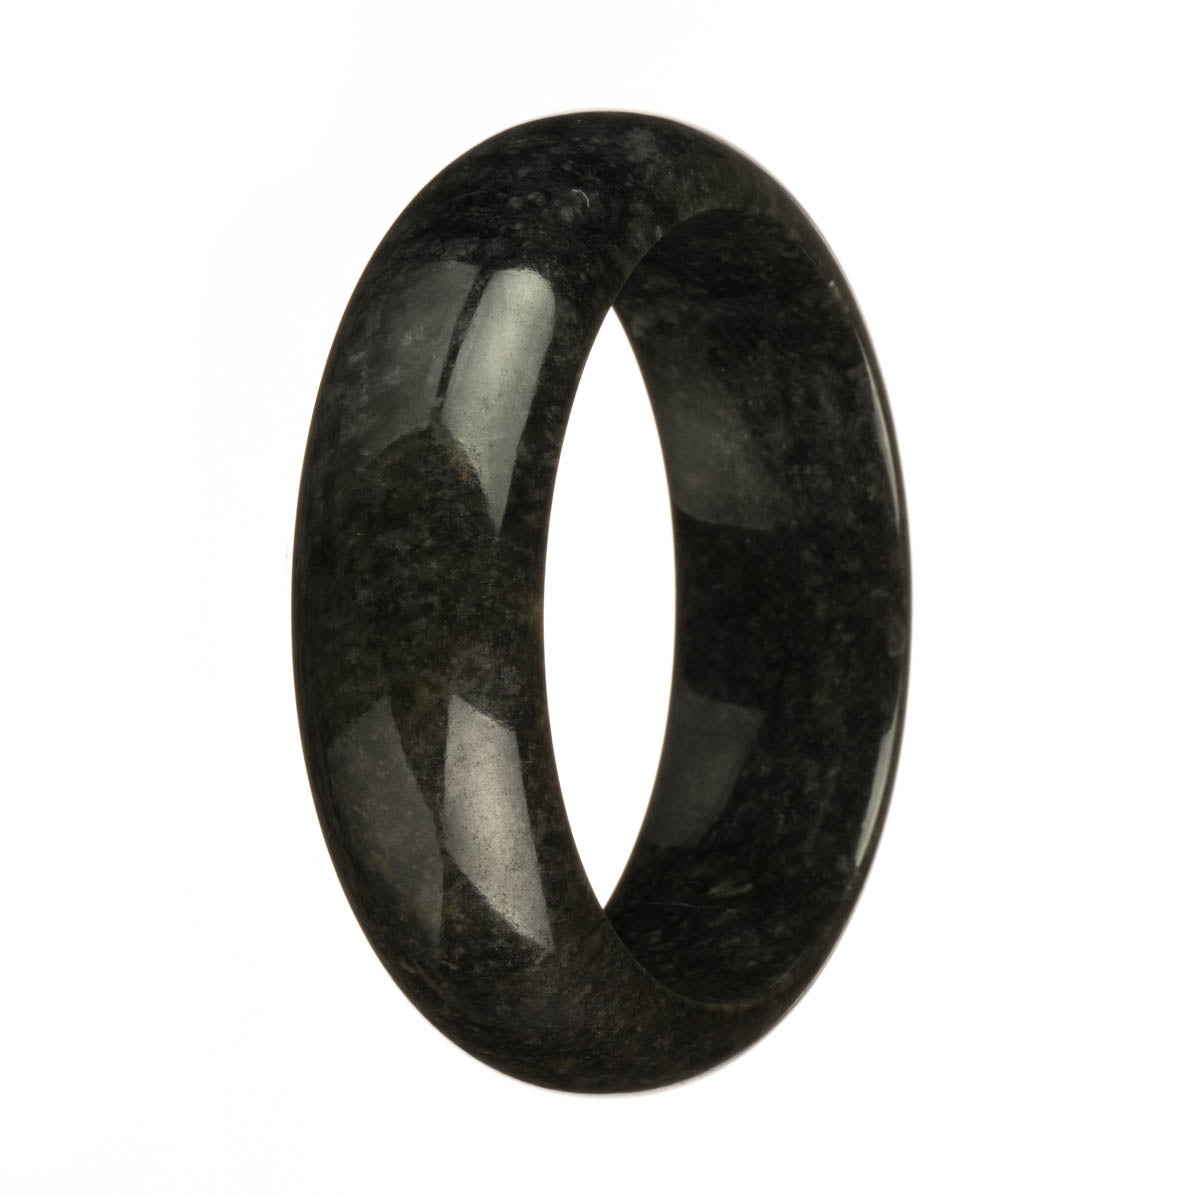 A half-moon shaped black jadeite bangle bracelet, made from real natural jadeite.